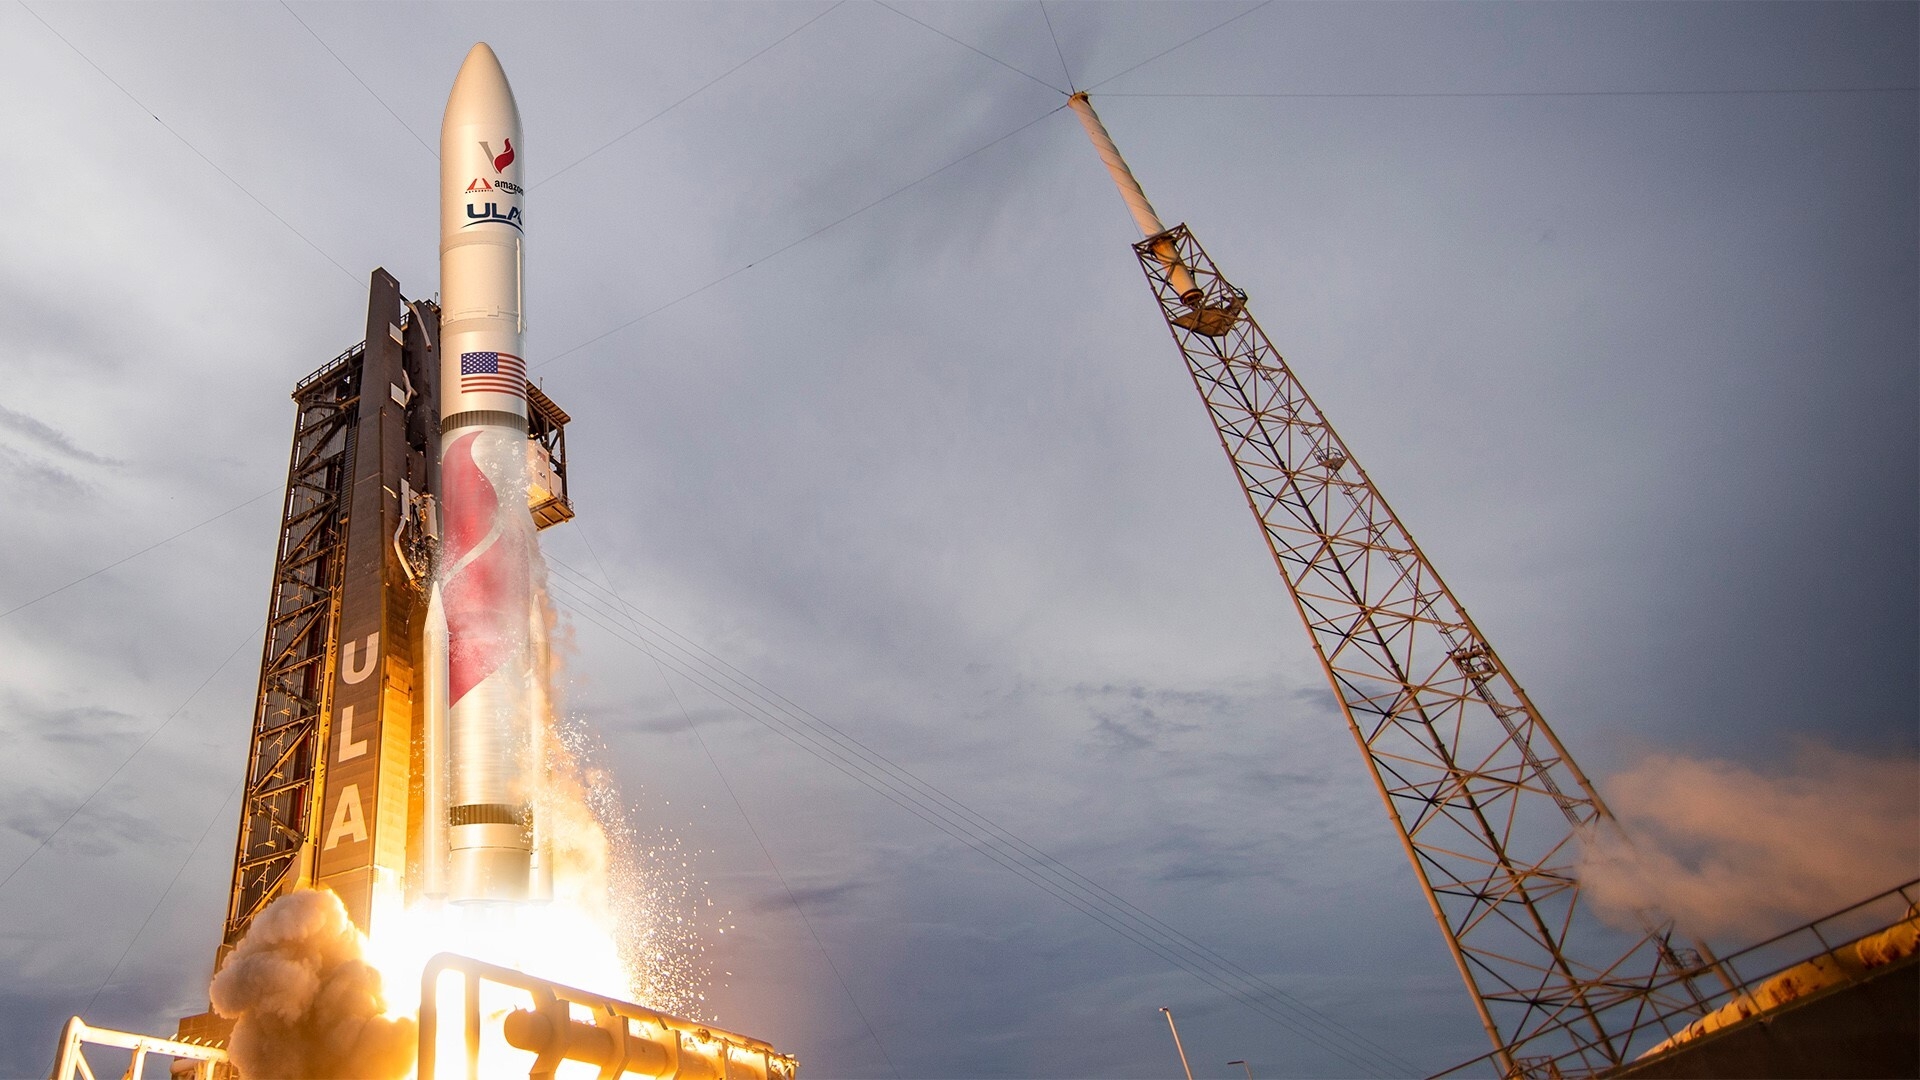 A ULA rocket takes launch into a night sky.